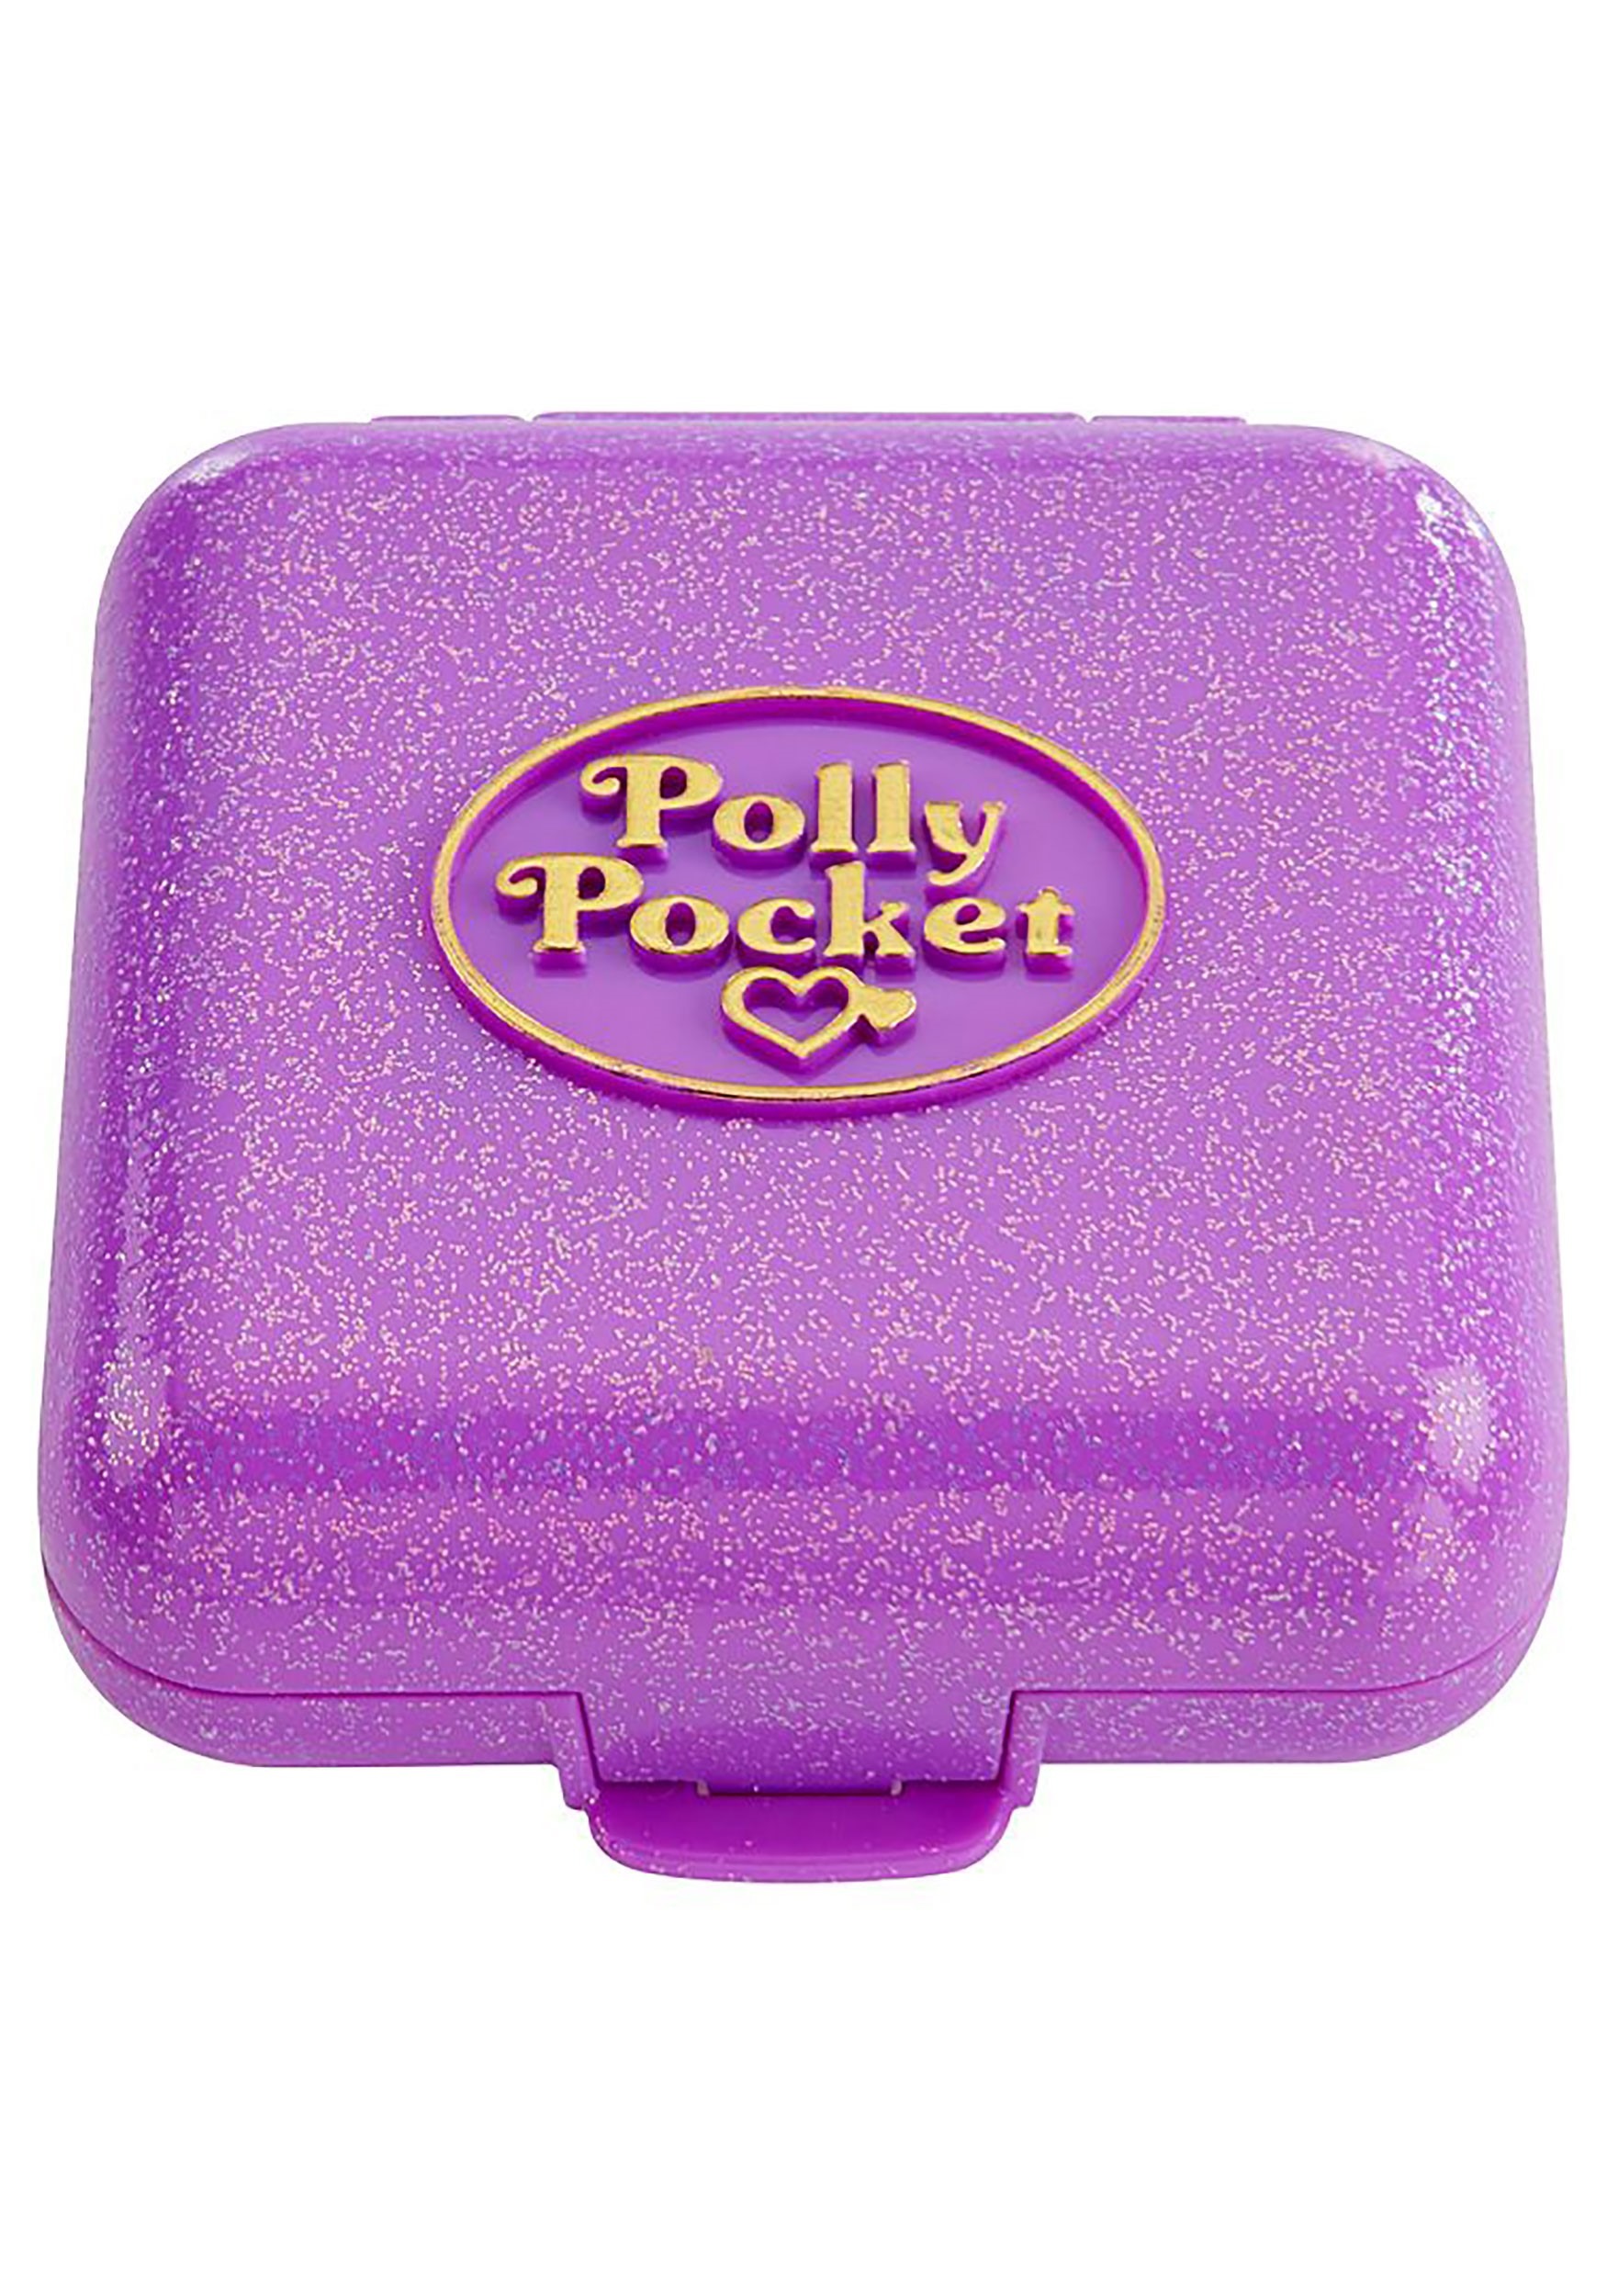 30 year polly pocket